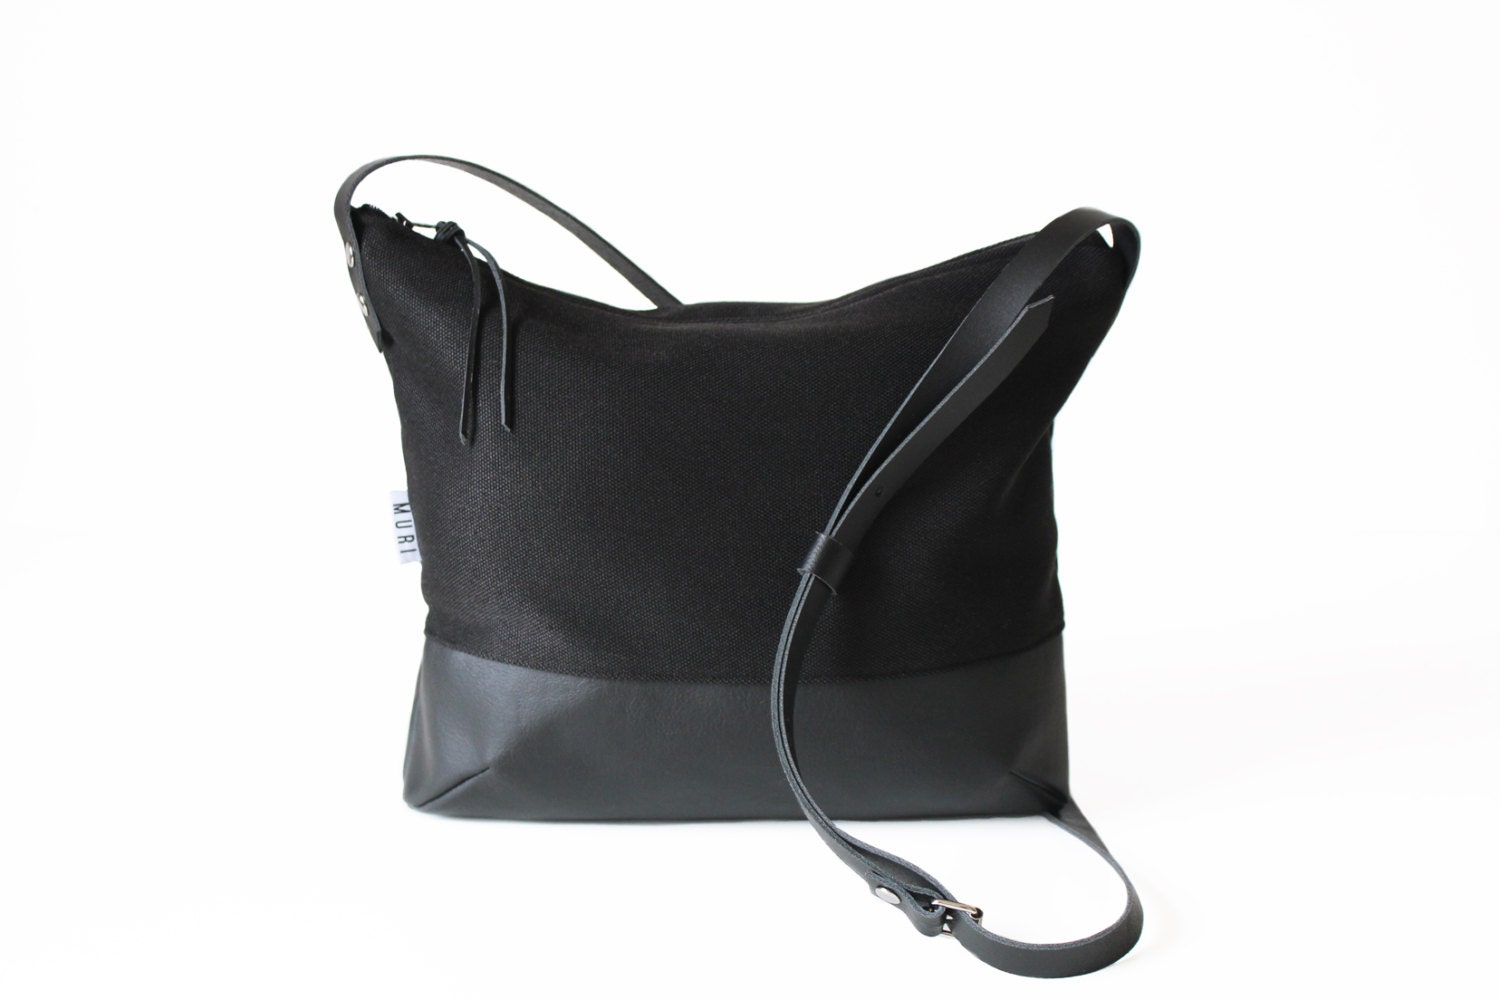 Black canvas bag crossbody purse leather strap handmade